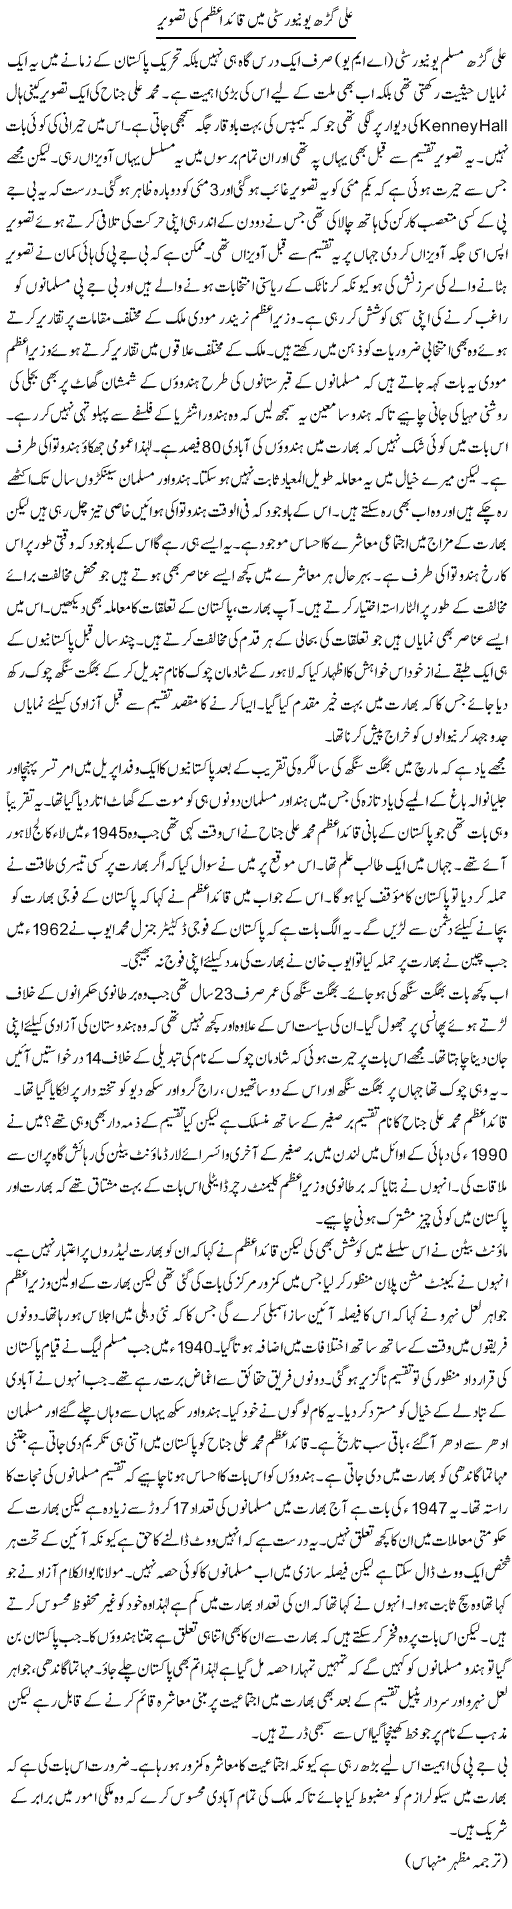 Ali Garh University Mein Quaid Azam Ki Tasweer | Kuldip Nayar | Daily Urdu Columns